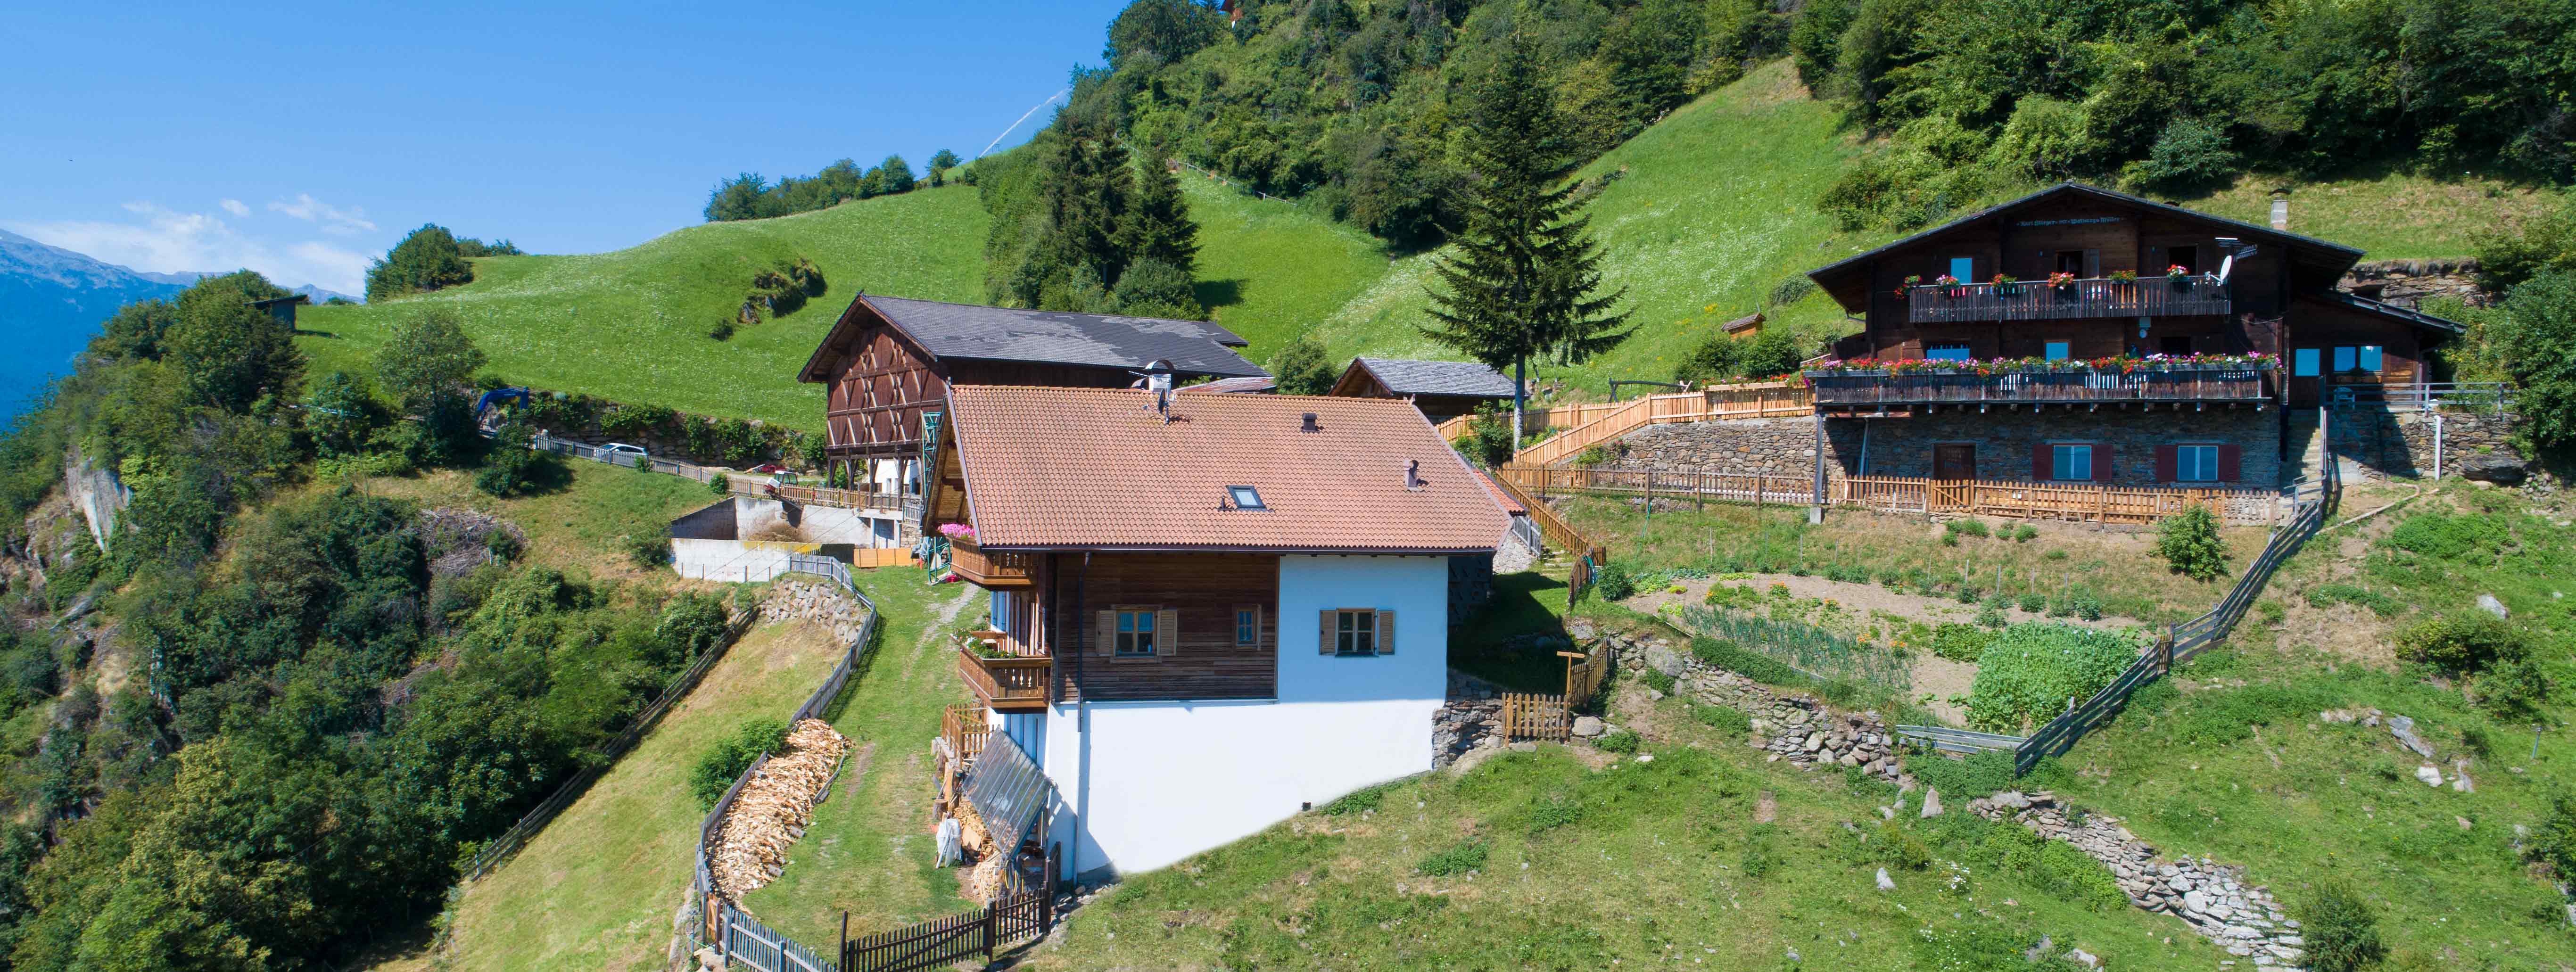 Maso Ausergrubhof - Parcines in Alto Adige